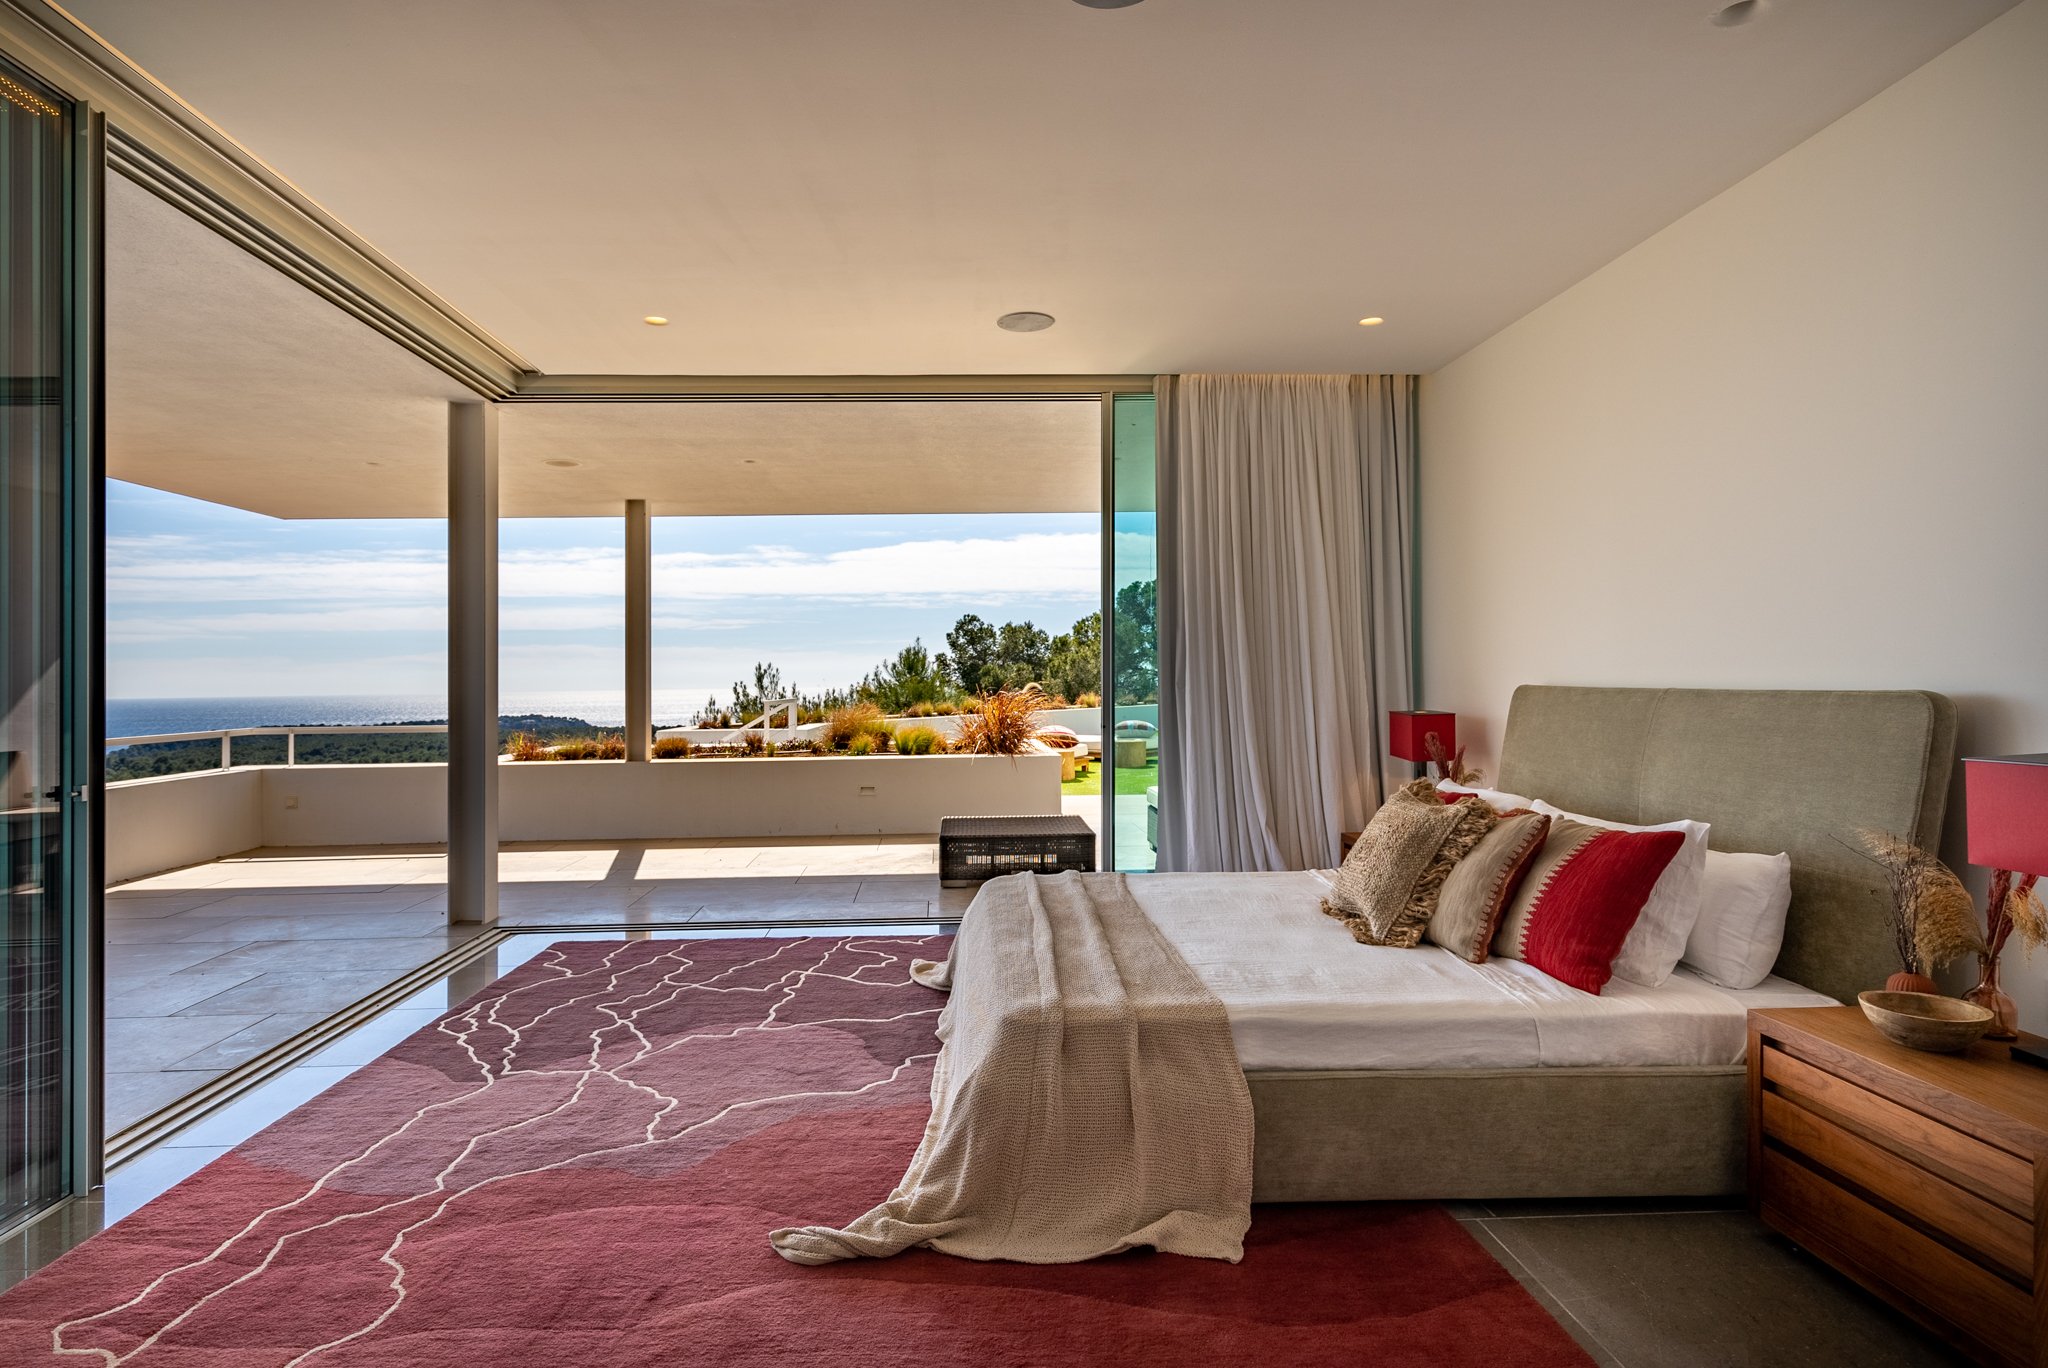 Francis York  Villa Adastra: Modern Mansion With Panoramic Island Views in Ibiza 52.jpg